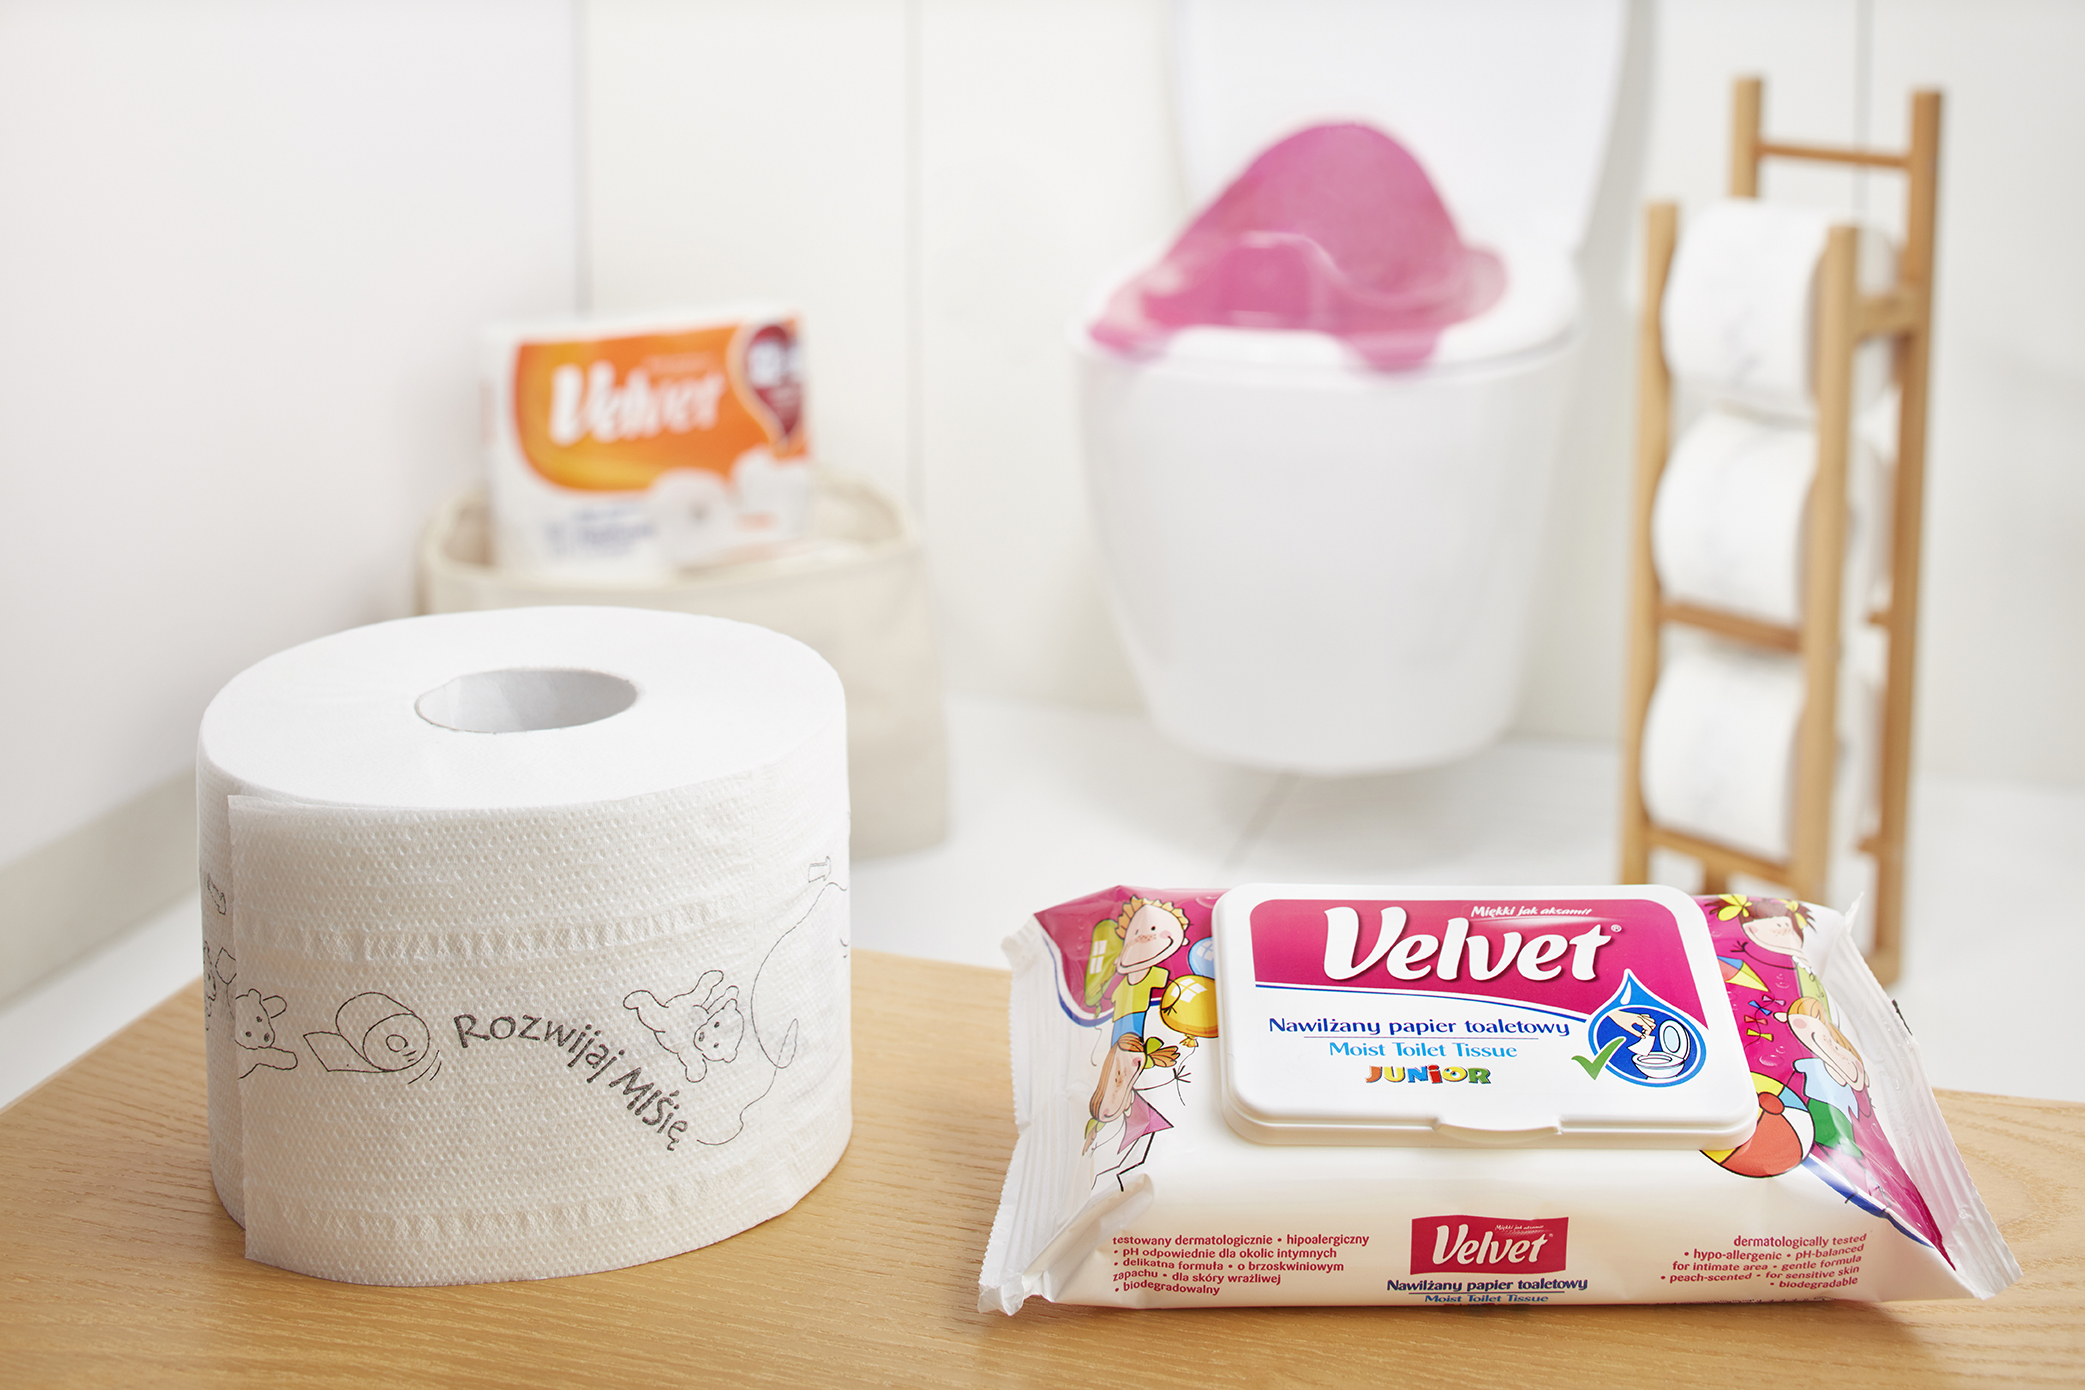 Junior nawilżany papier toaletowy Velvet